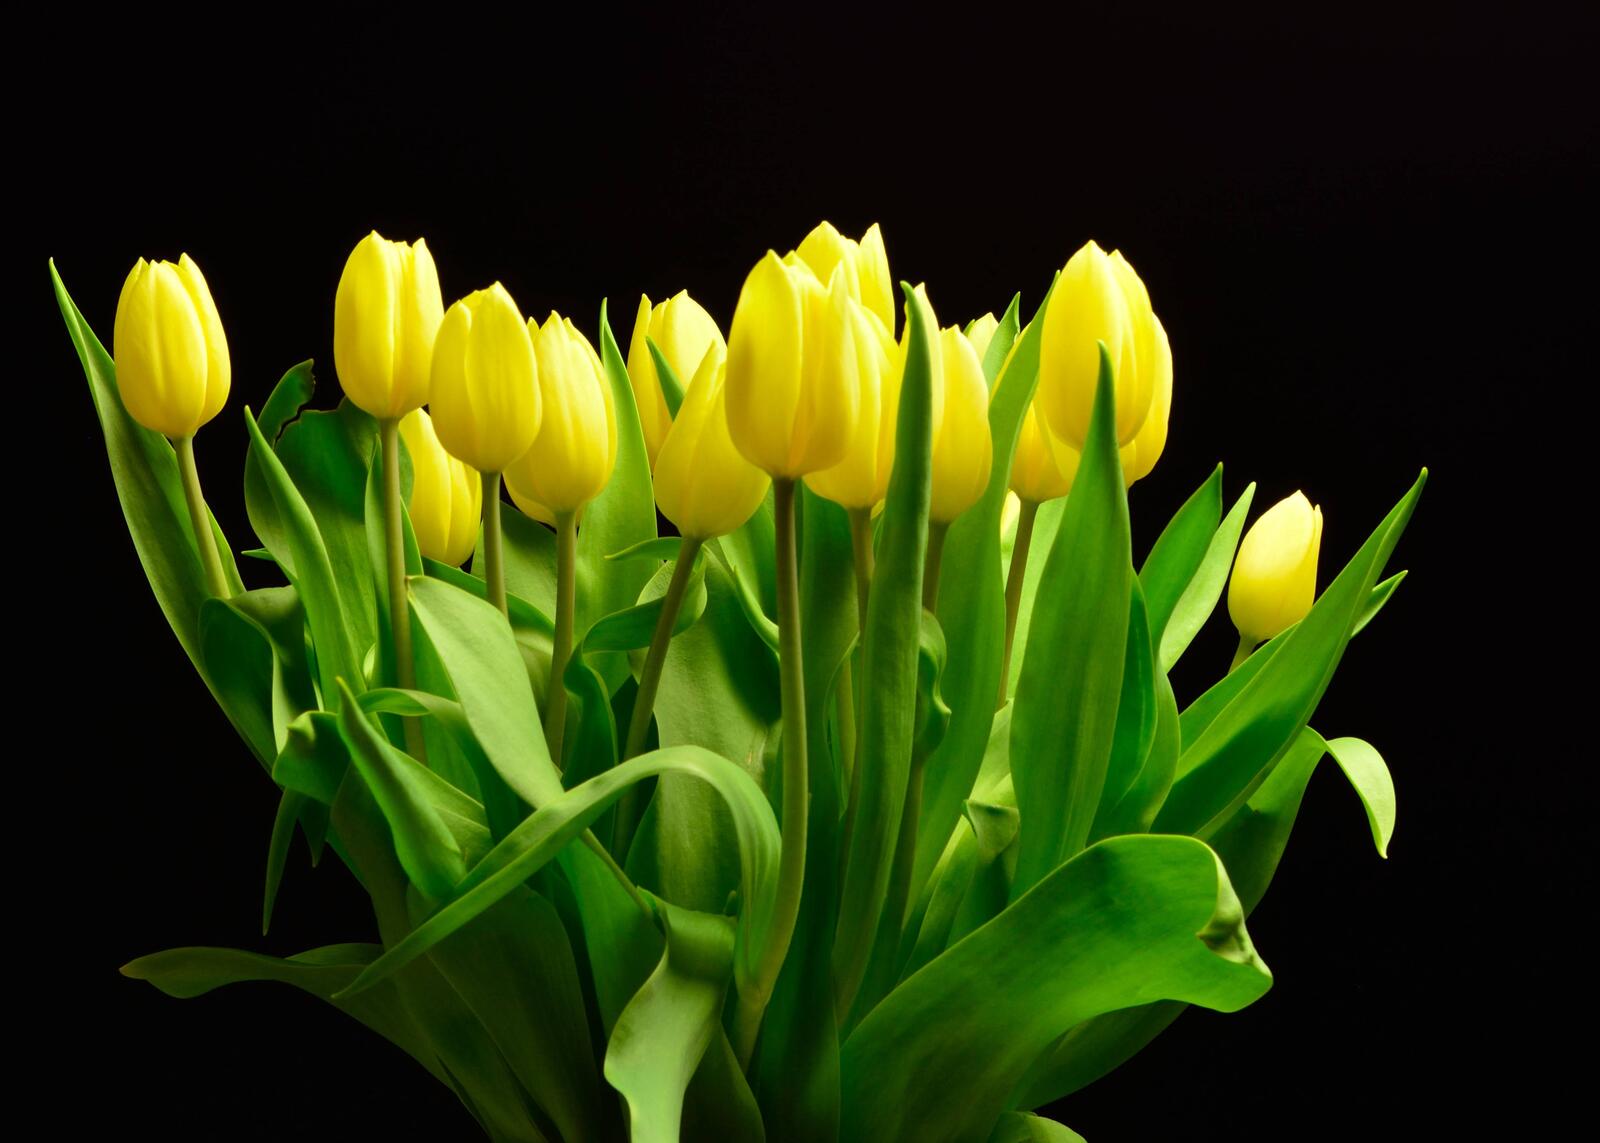 Wallpapers tulips yellow petals black background on the desktop